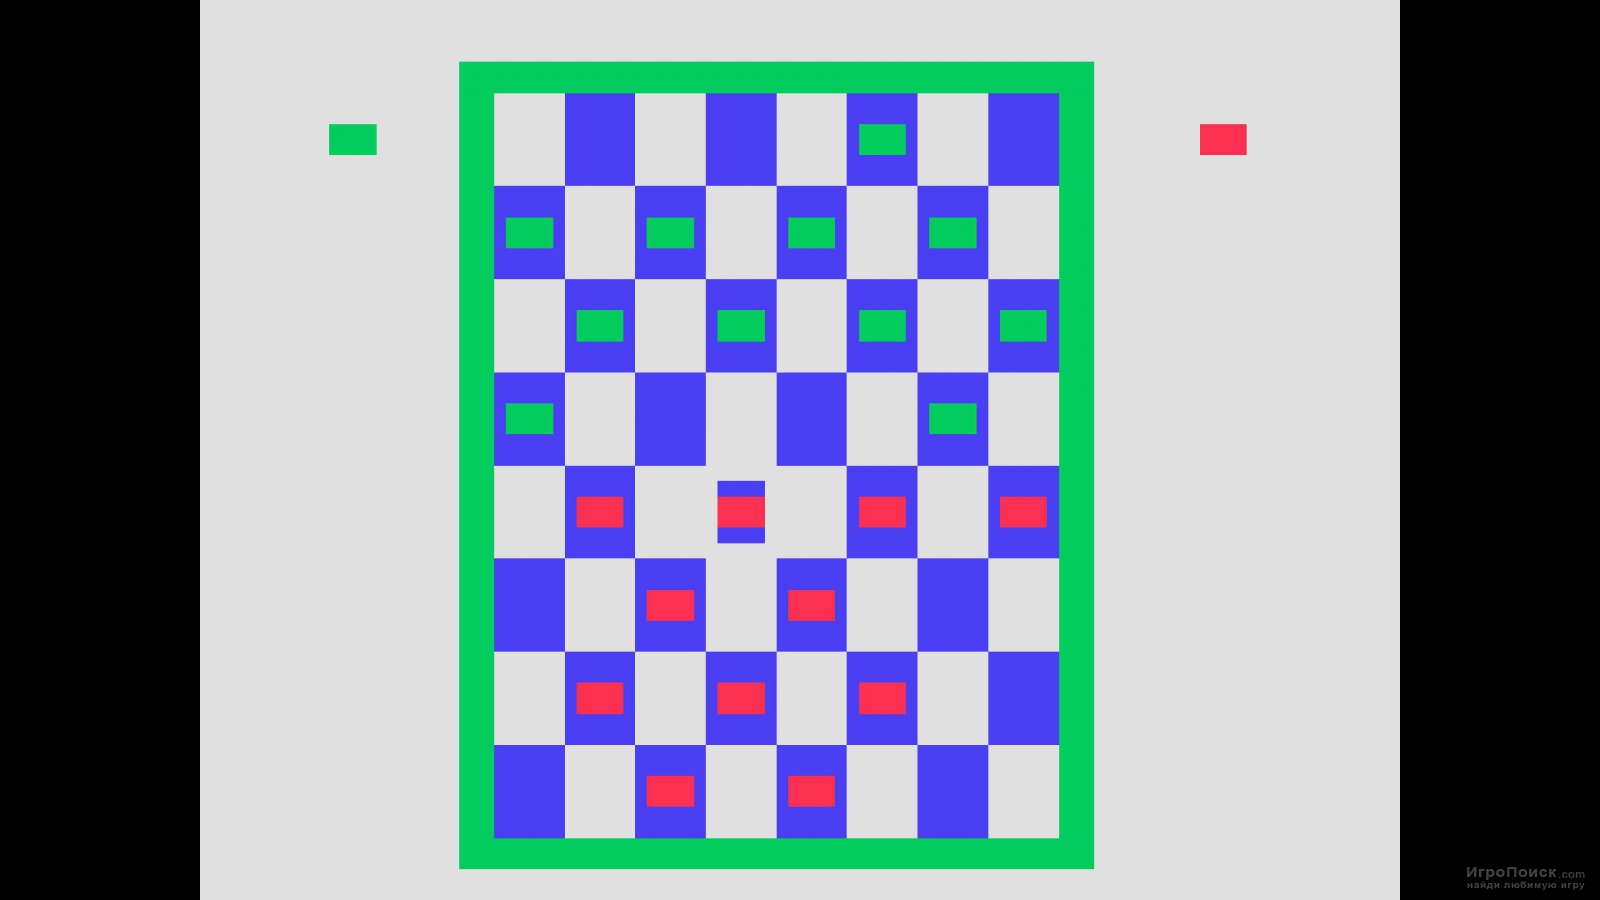    Checkers